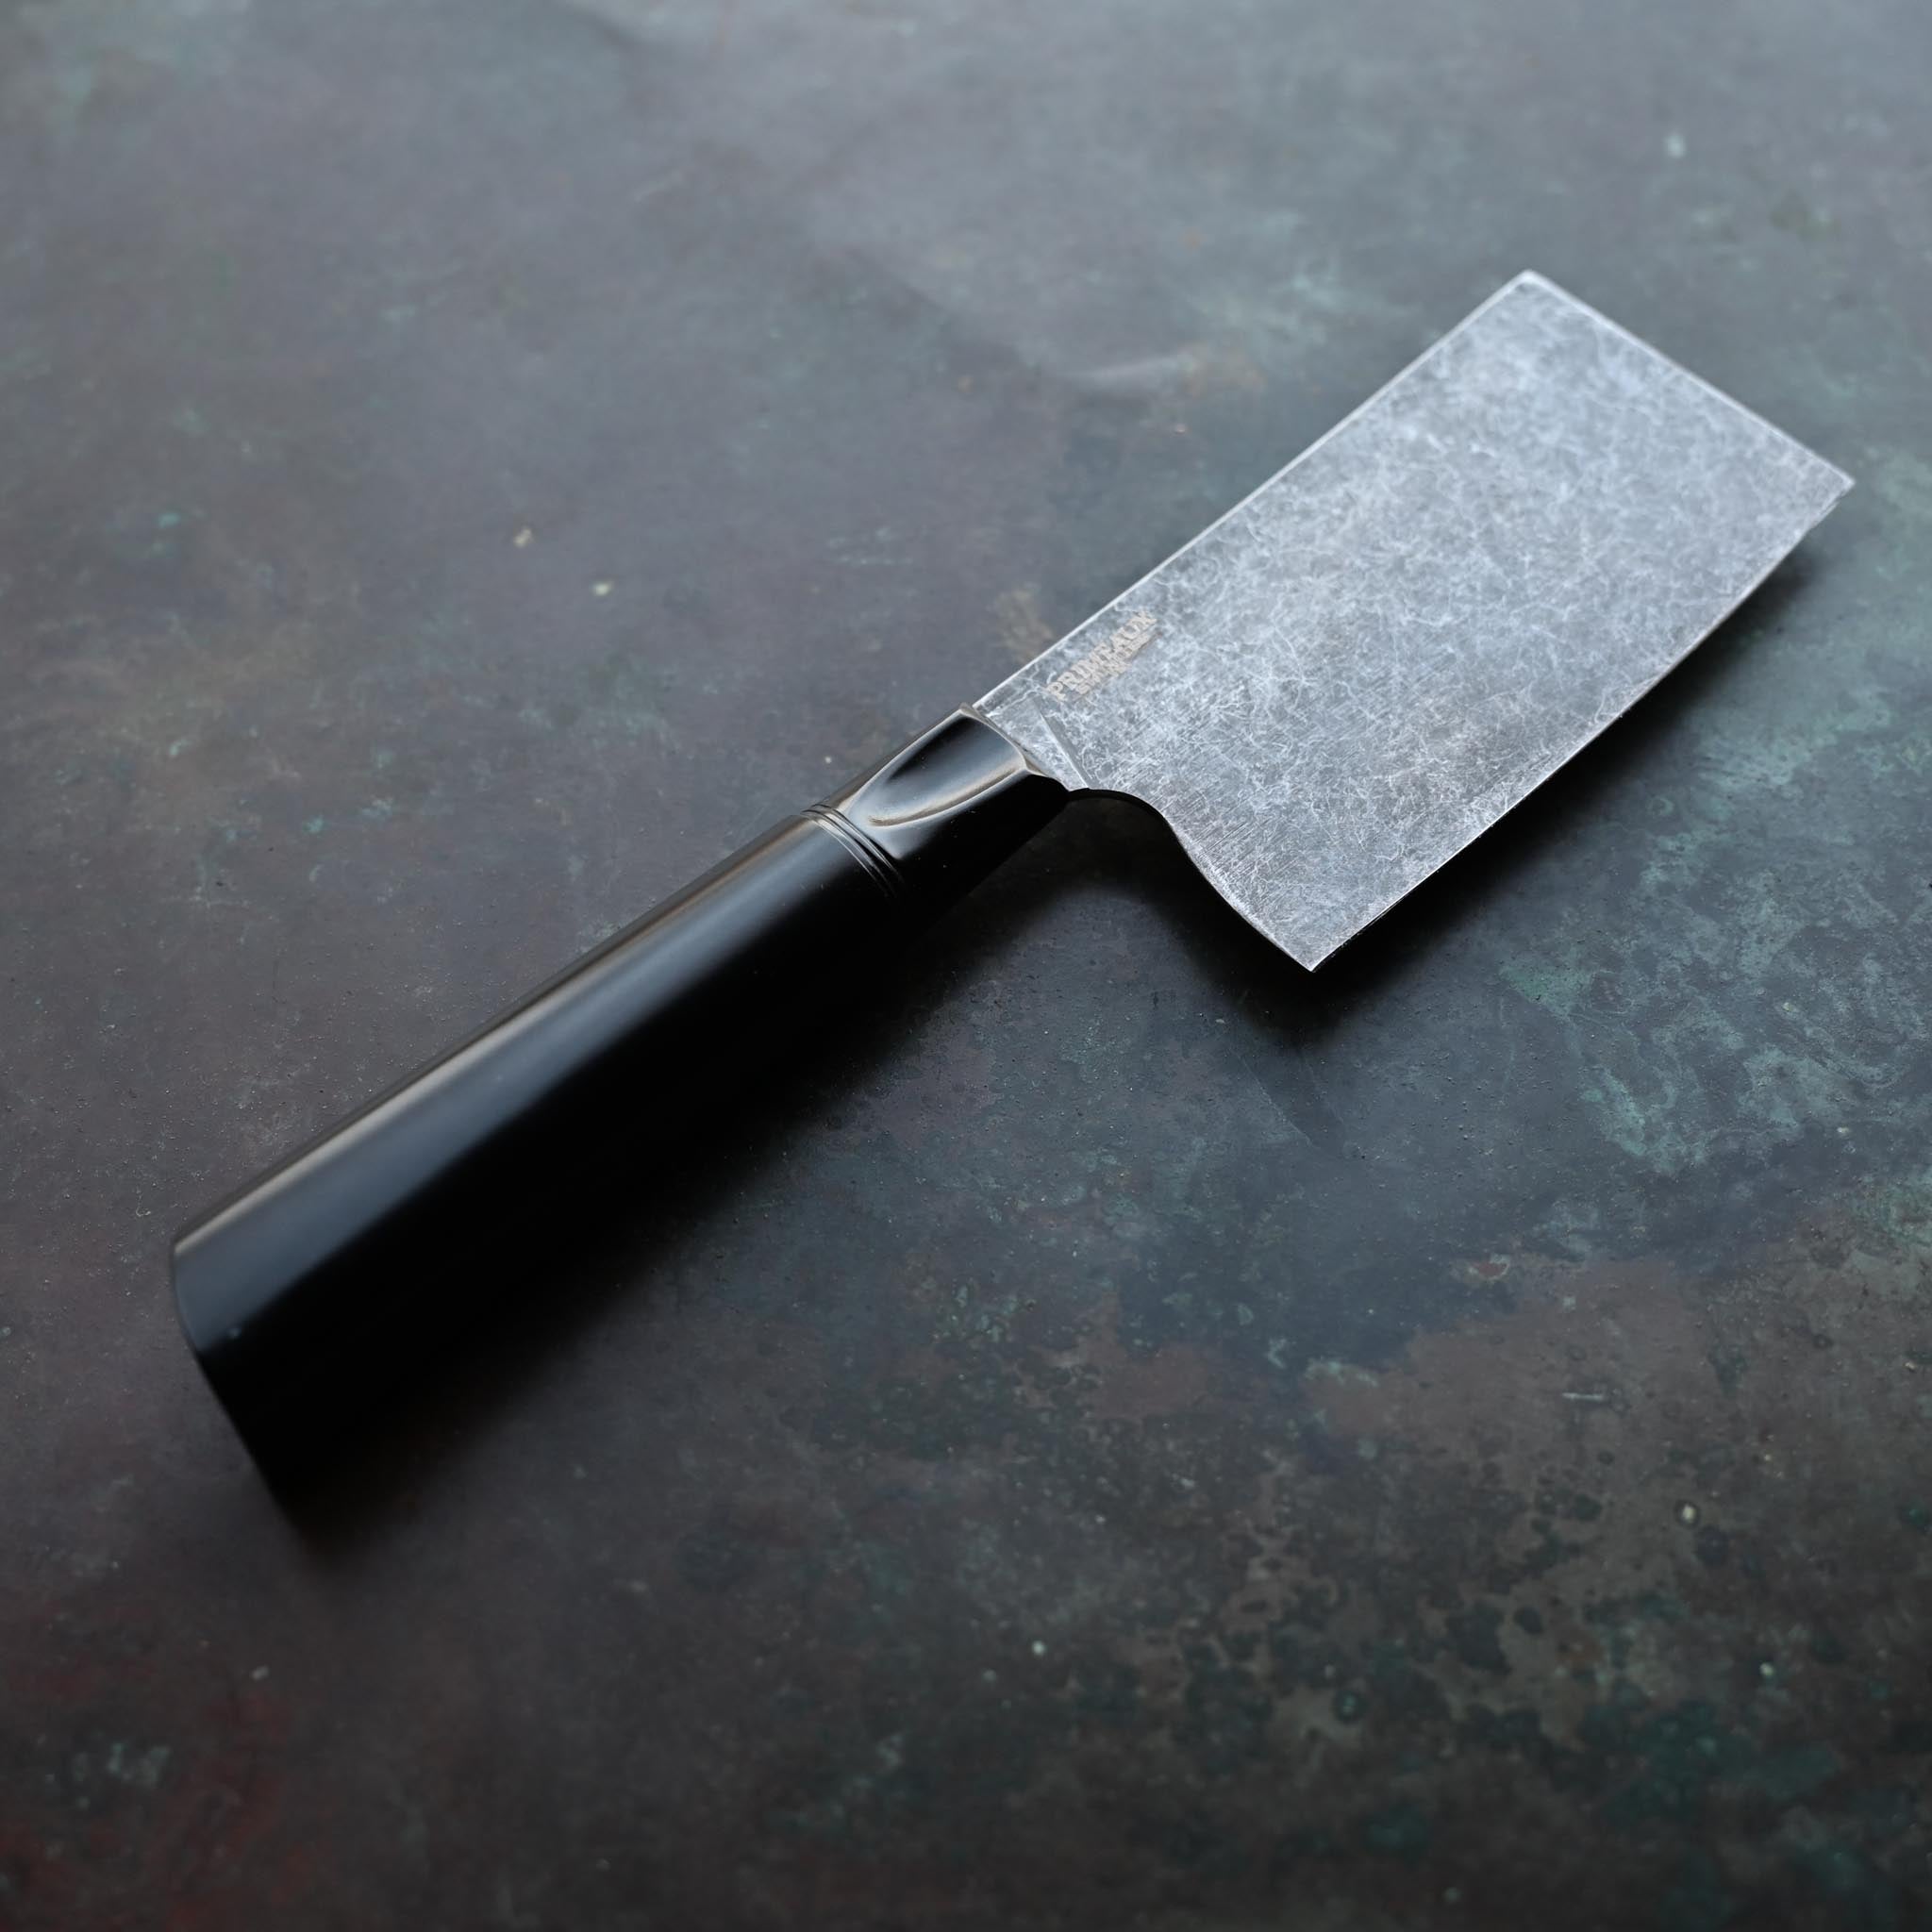 STONEWASH MINI CLEAVER OBSIDIAN KITCHEN KNIFE BLACK BOLSTER AND BLACK HANDLE ON CONCRETE BACKGROUND